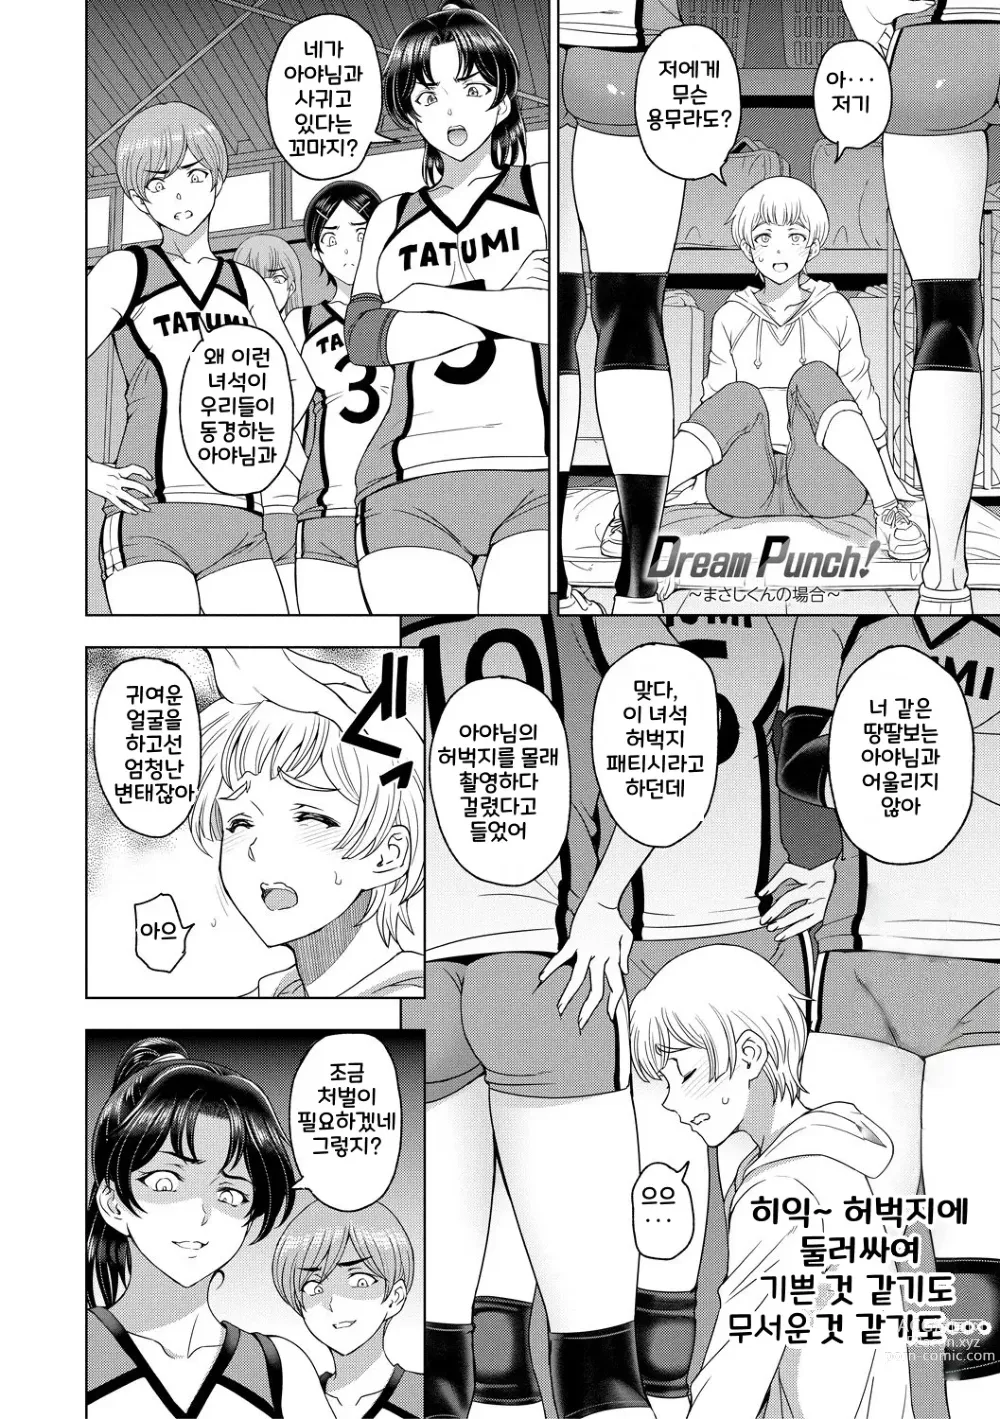 Page 212 of manga Nee Ecchi shichao kka - Hey, lets have sex.